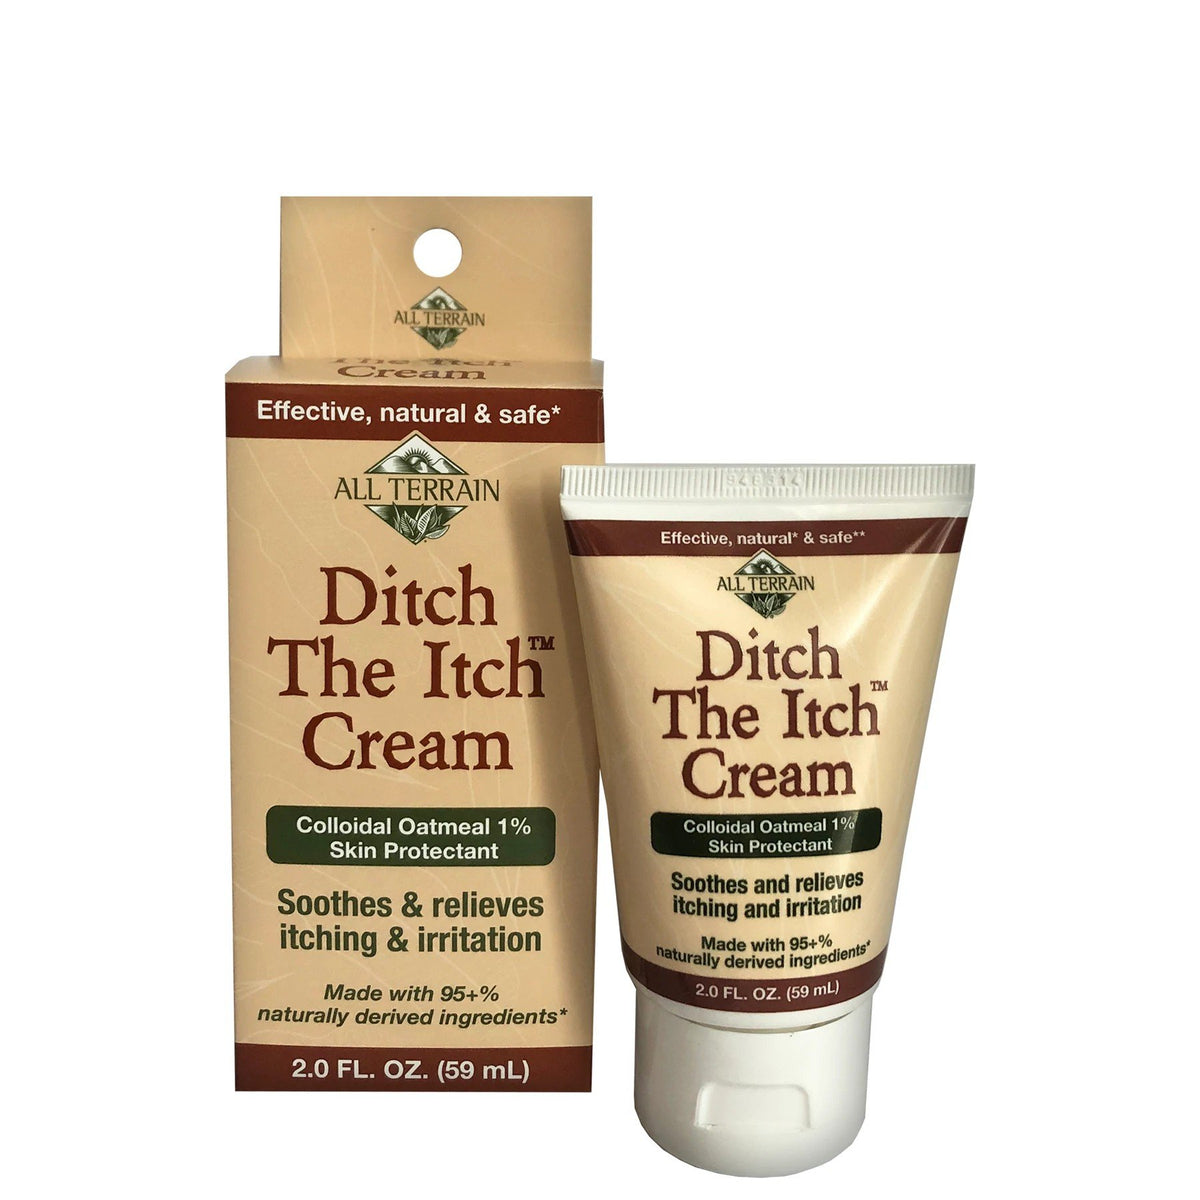 All Terrain Ditch The Itch Cream 2 oz Cream